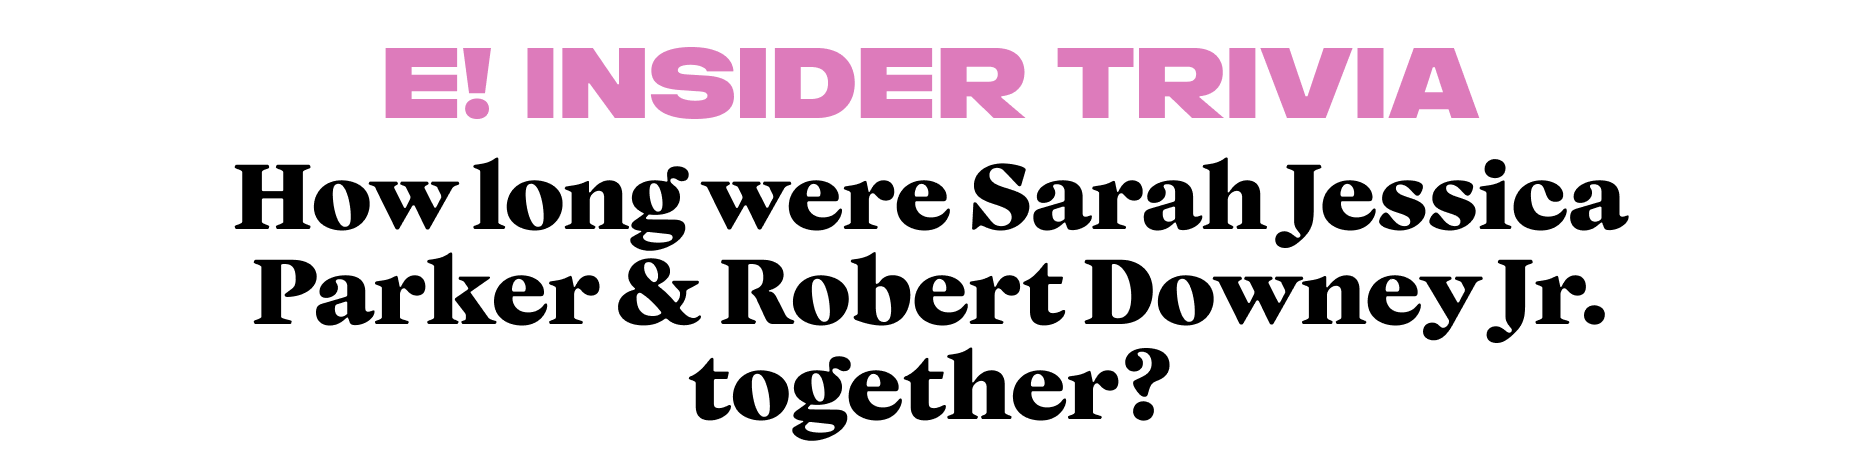 How long were Sarah Jessica Parker & Robert Downey Jr. together?